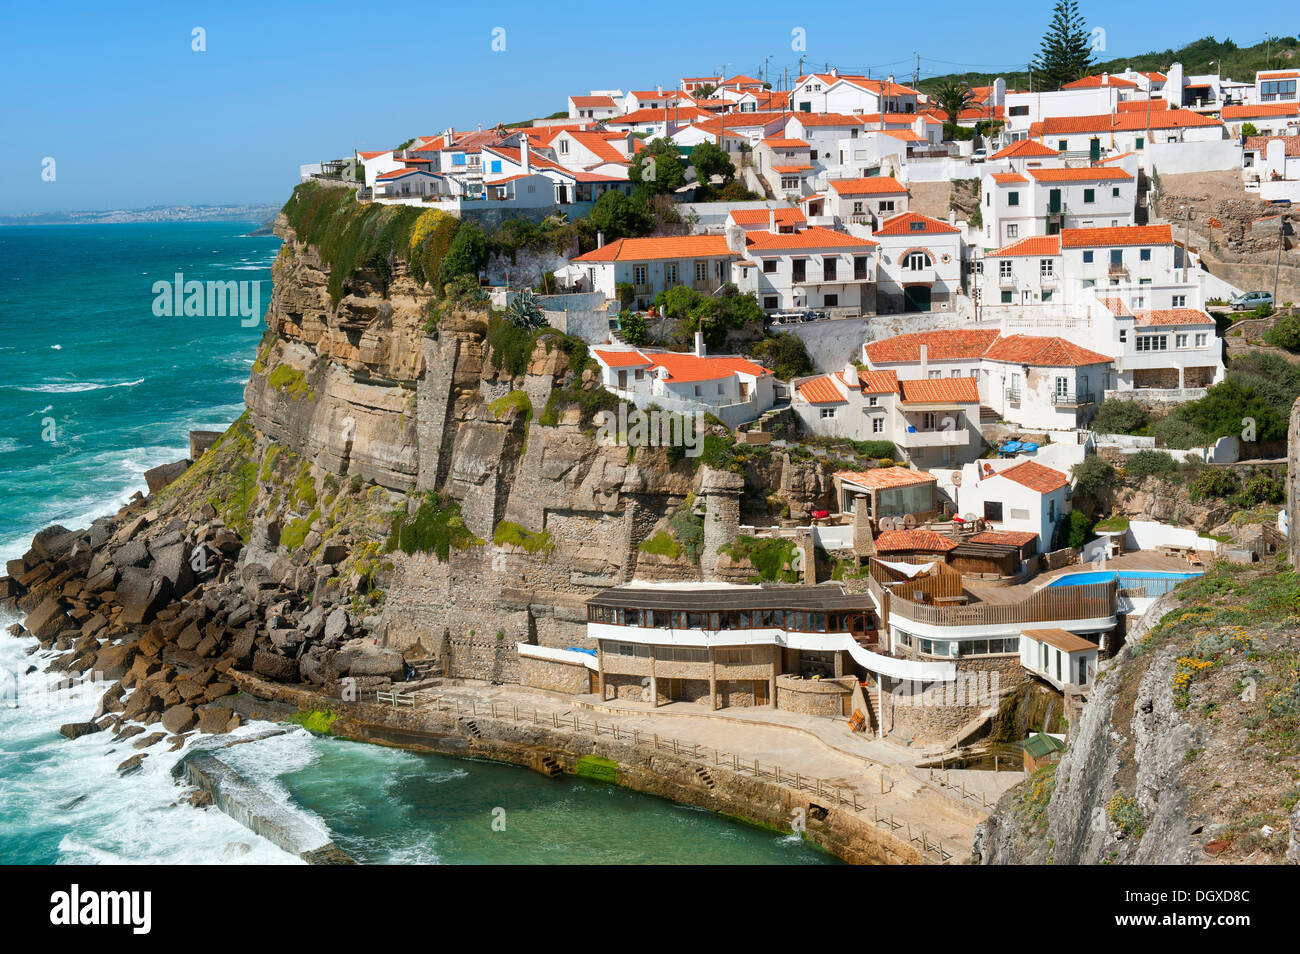 Piscina naturale, Azenhas do Mar, sulla costa di Lisbona, Portogallo Natürlicher piscina, Azenhas do Mar, Lisbona Küste, Portogallo Foto Stock